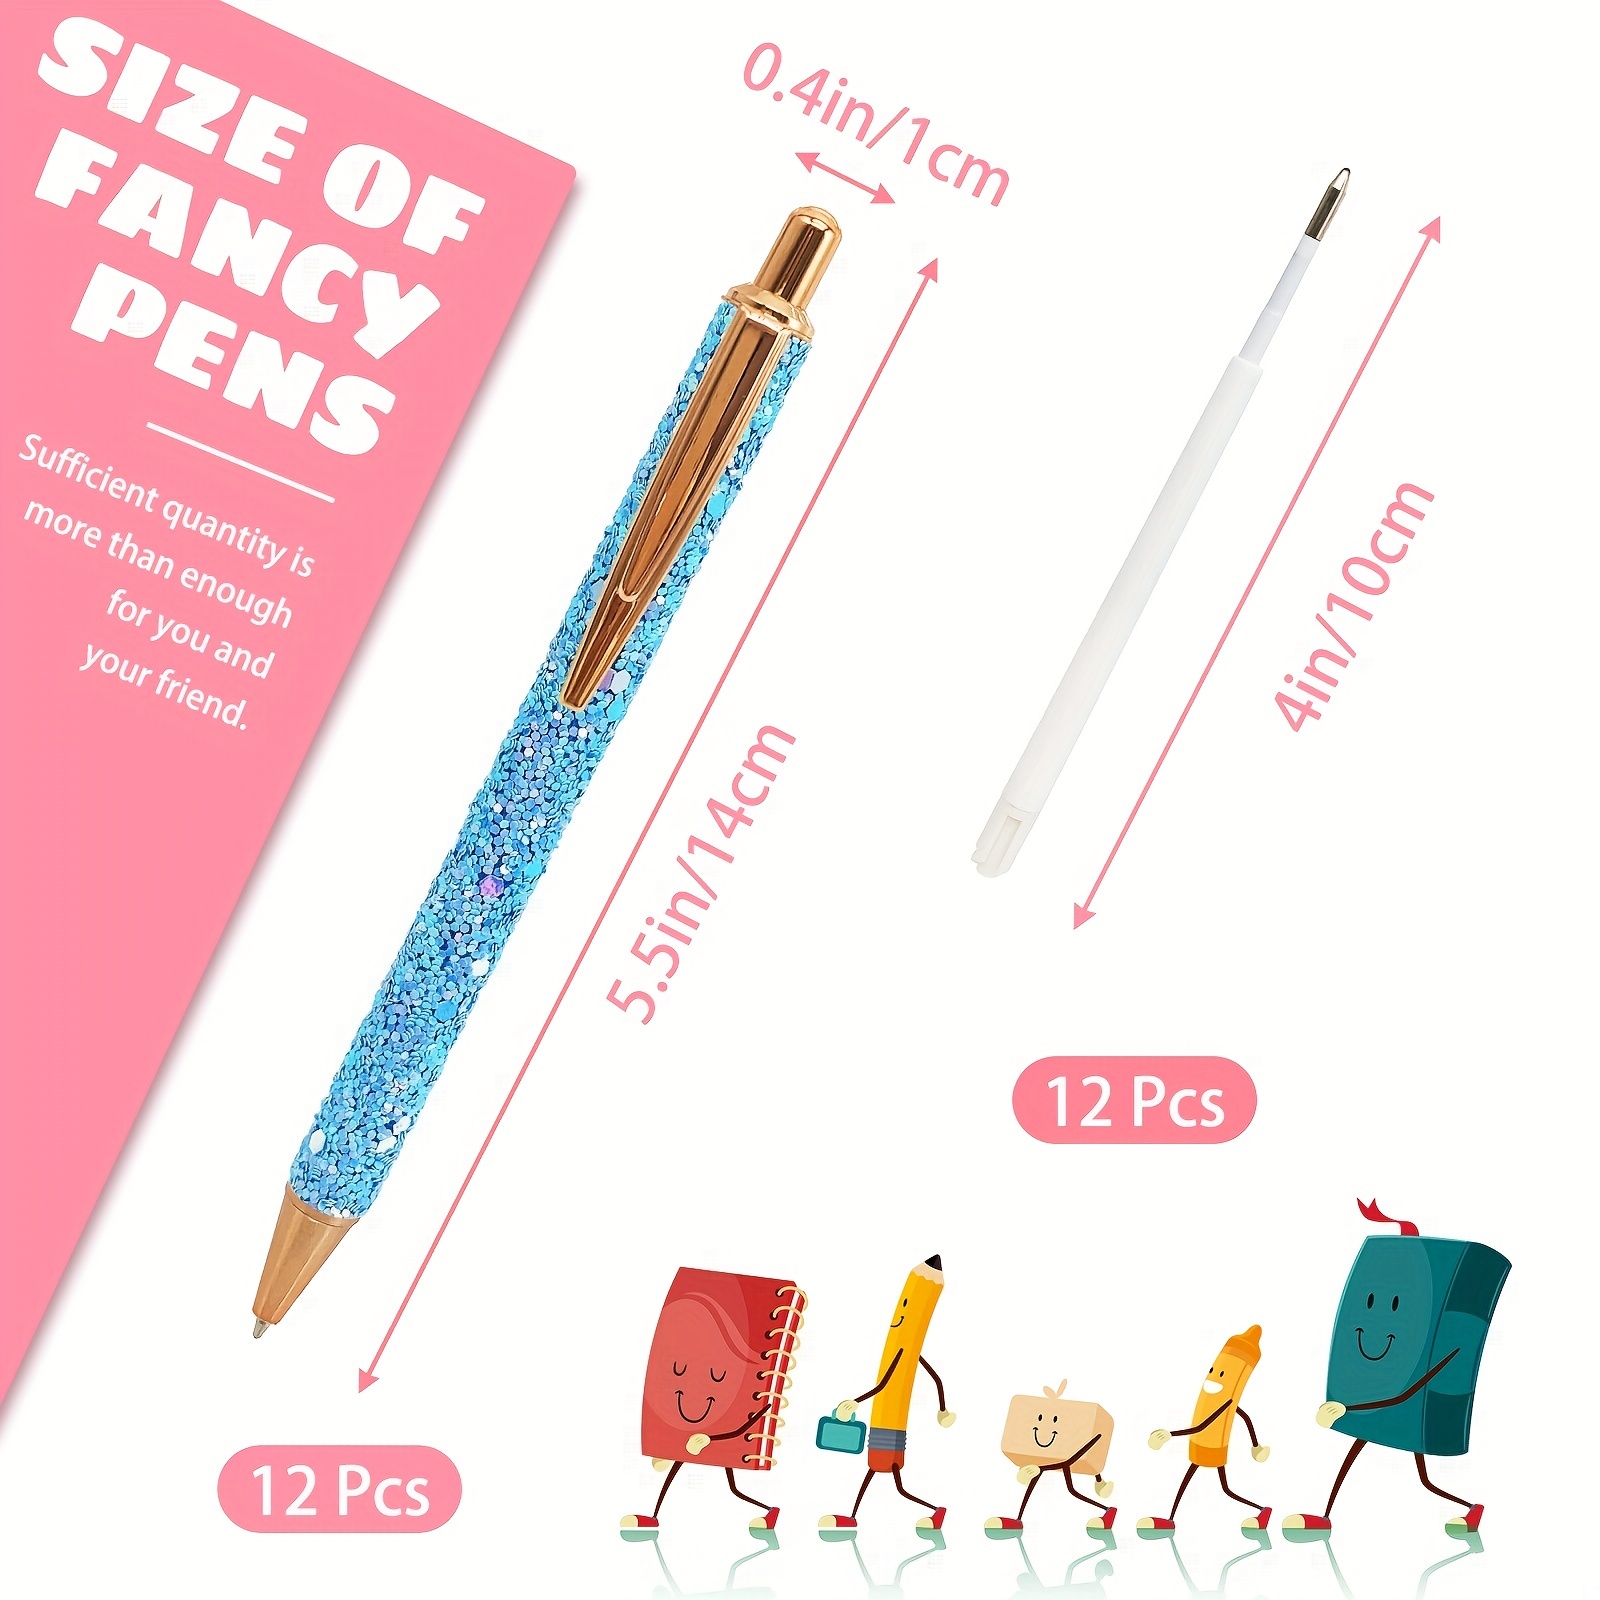 Ballpoint pen set sparkling colorful body funny pen set 14cm